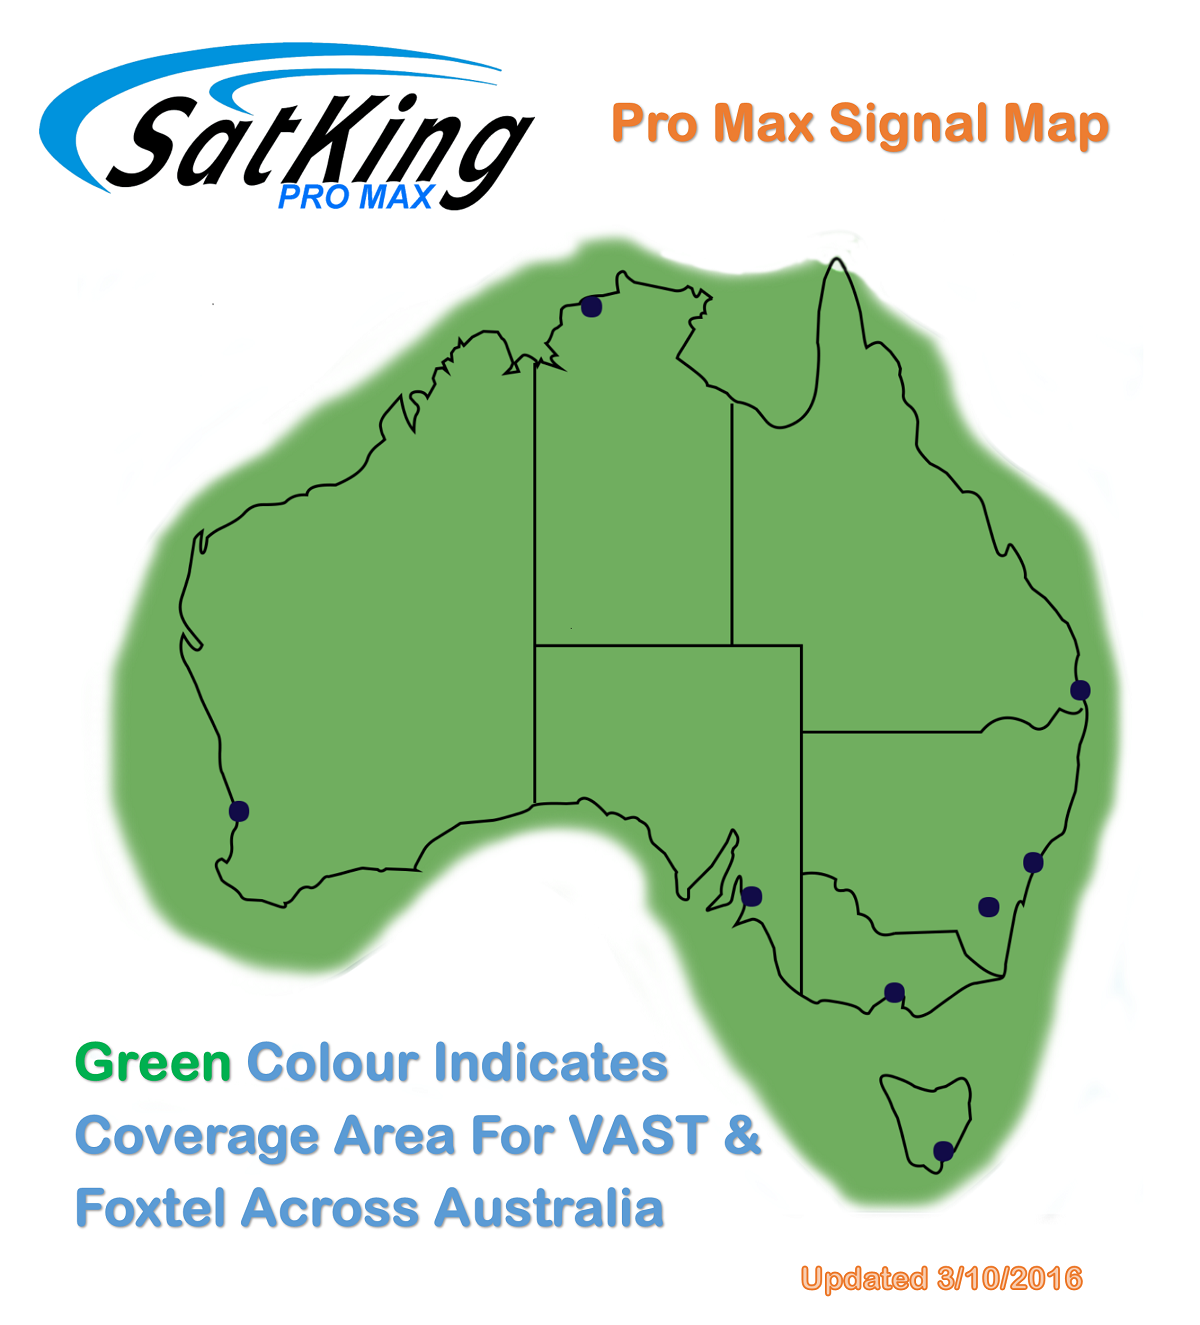 Pro Max Satellite Signal Estimated Coverage Map